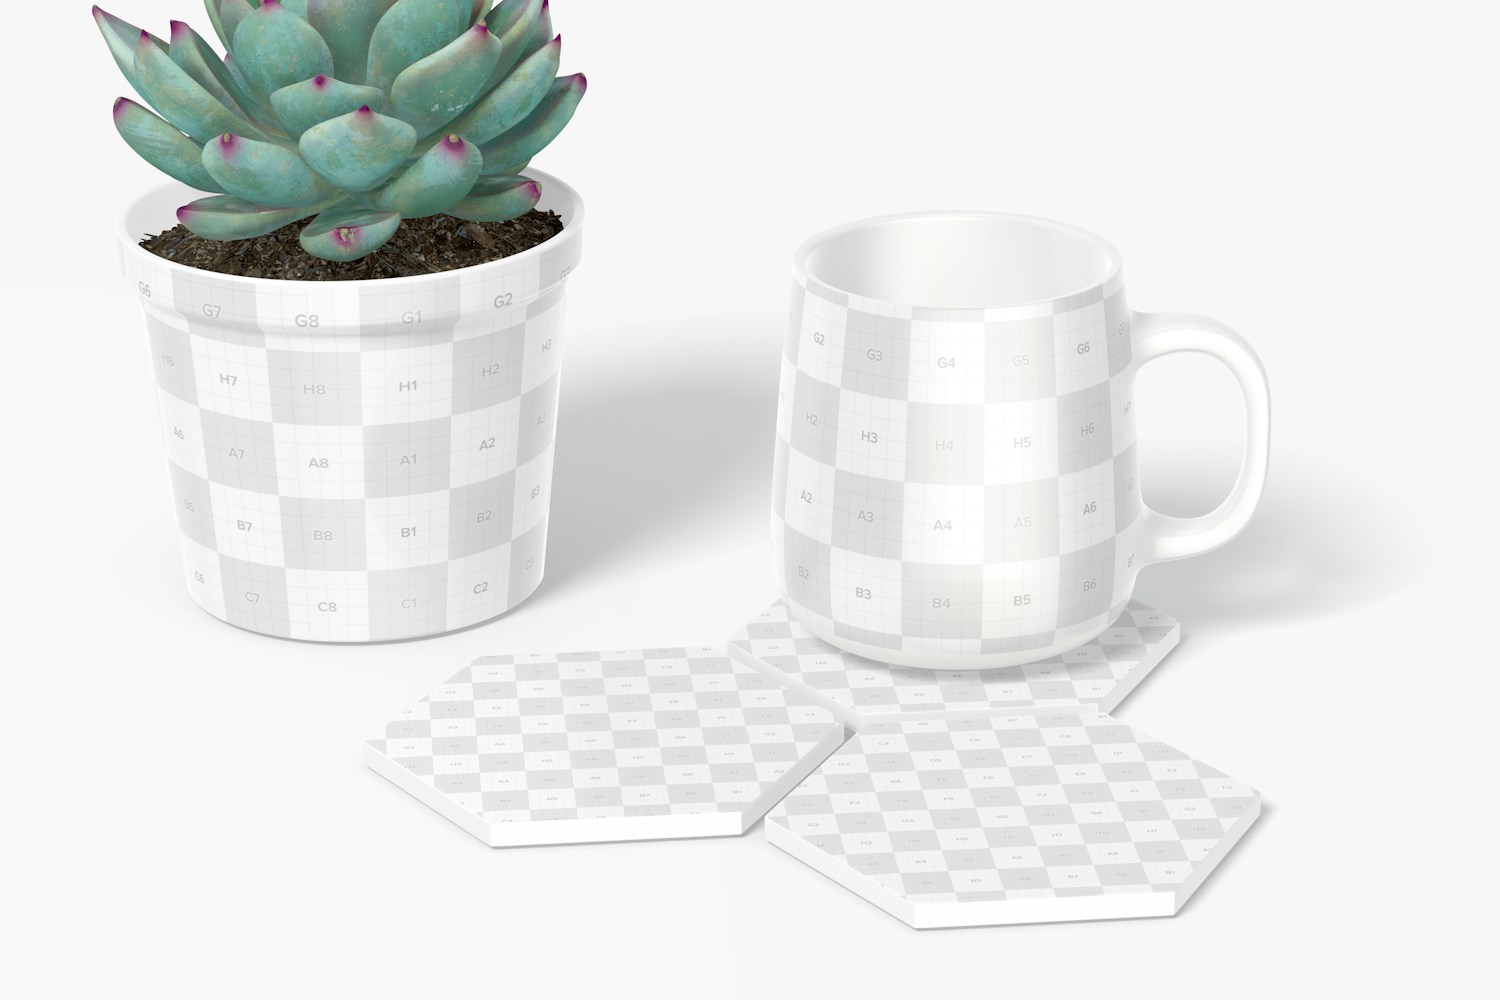 Hexagonal Coasters with Plant Pot Mockup